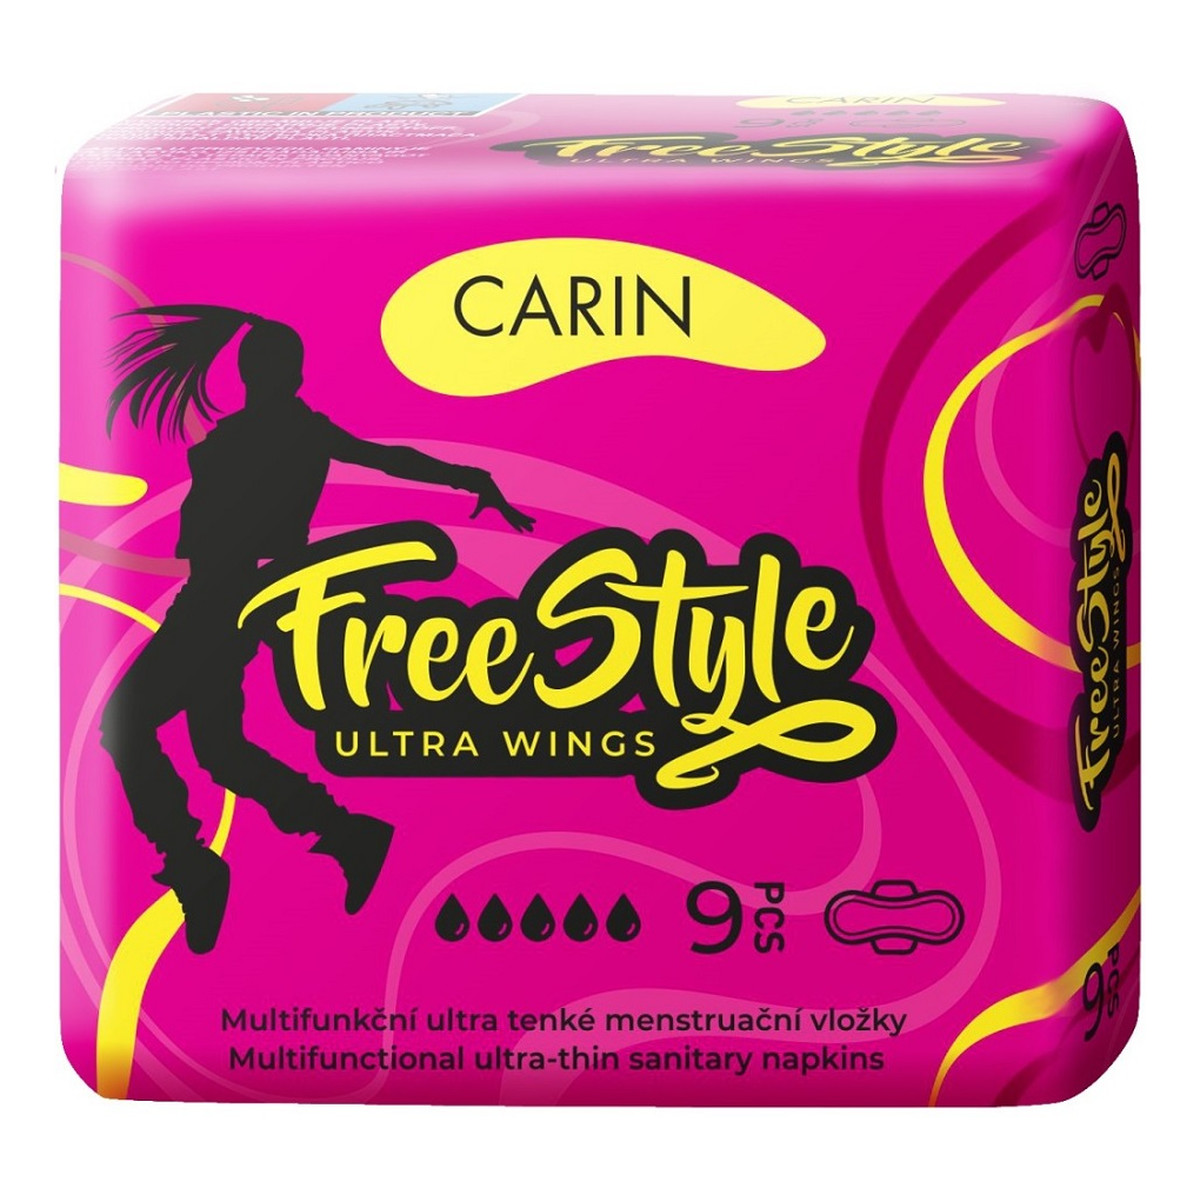 Carin Freestyle ultra wings podpaski higieniczne 9szt